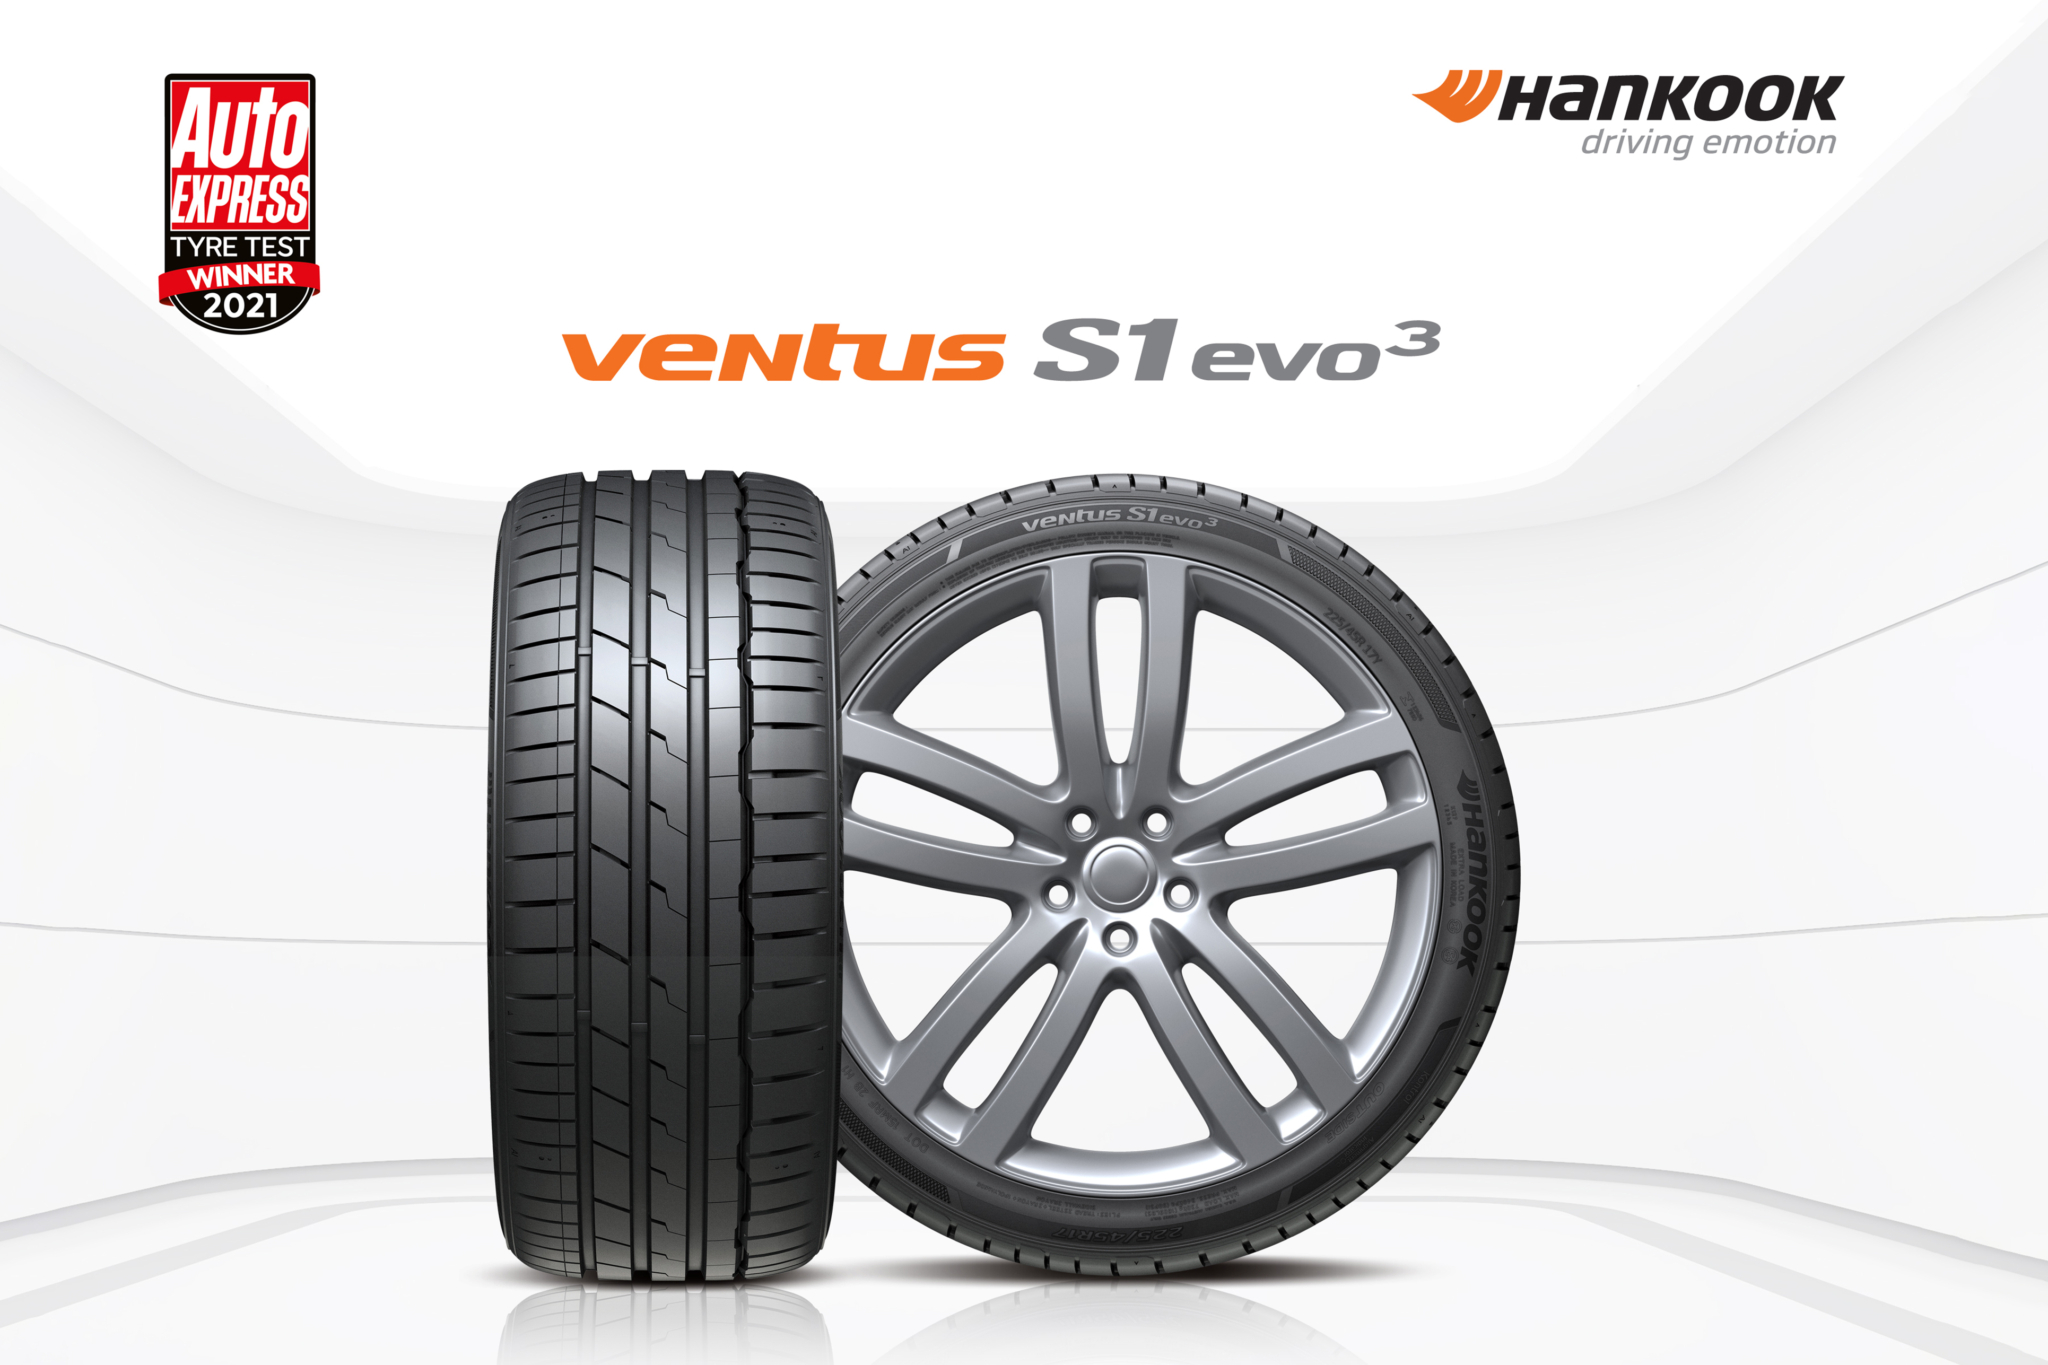 Hankook Ventus S1 evo 3 Tyrepress Summer Tyre wins - Express Test 2021 Auto